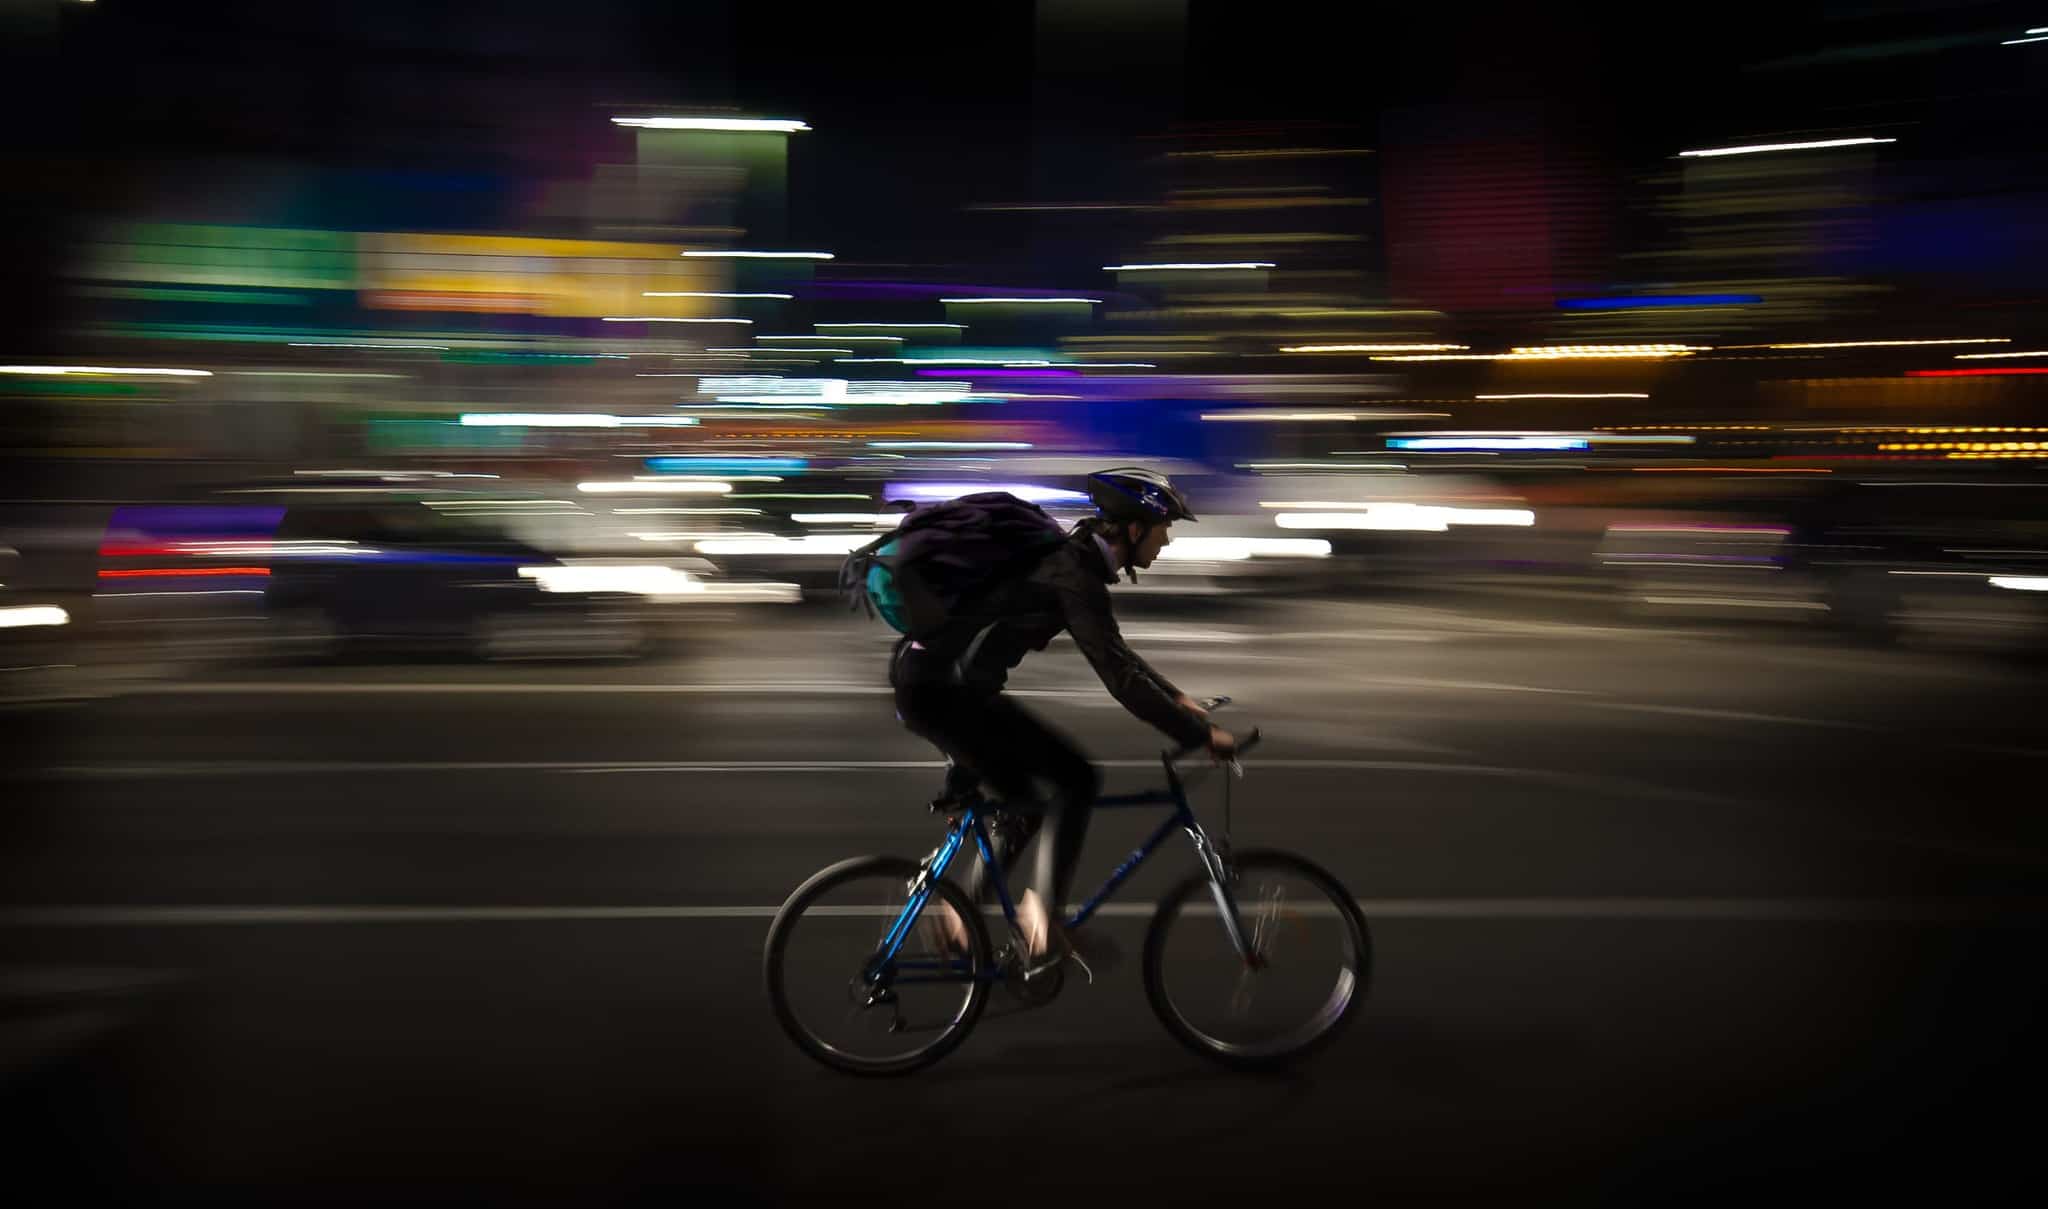 cyclist riding a bike with a blurred dark background